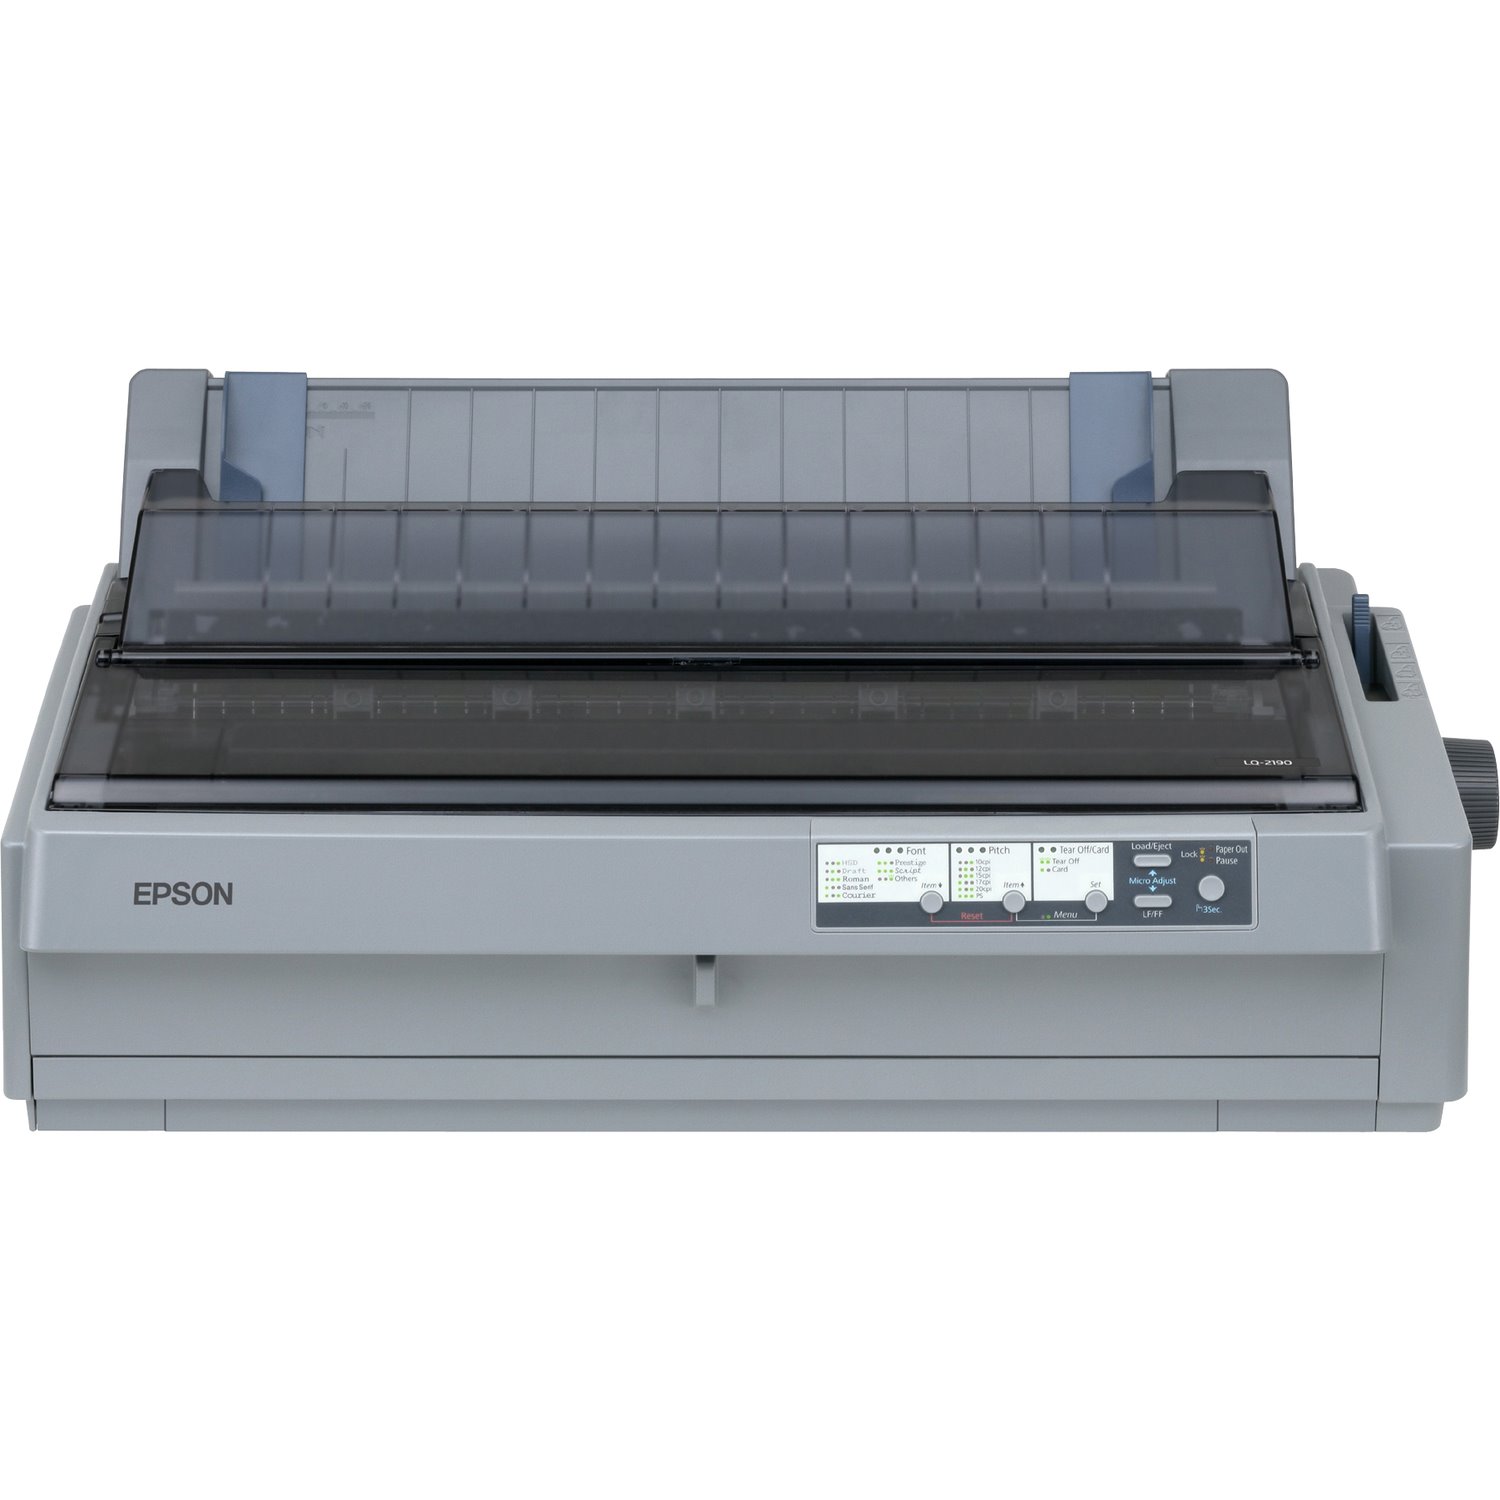 Epson LQ-2190 24-pin Dot Matrix Printer - Monochrome - Energy Star